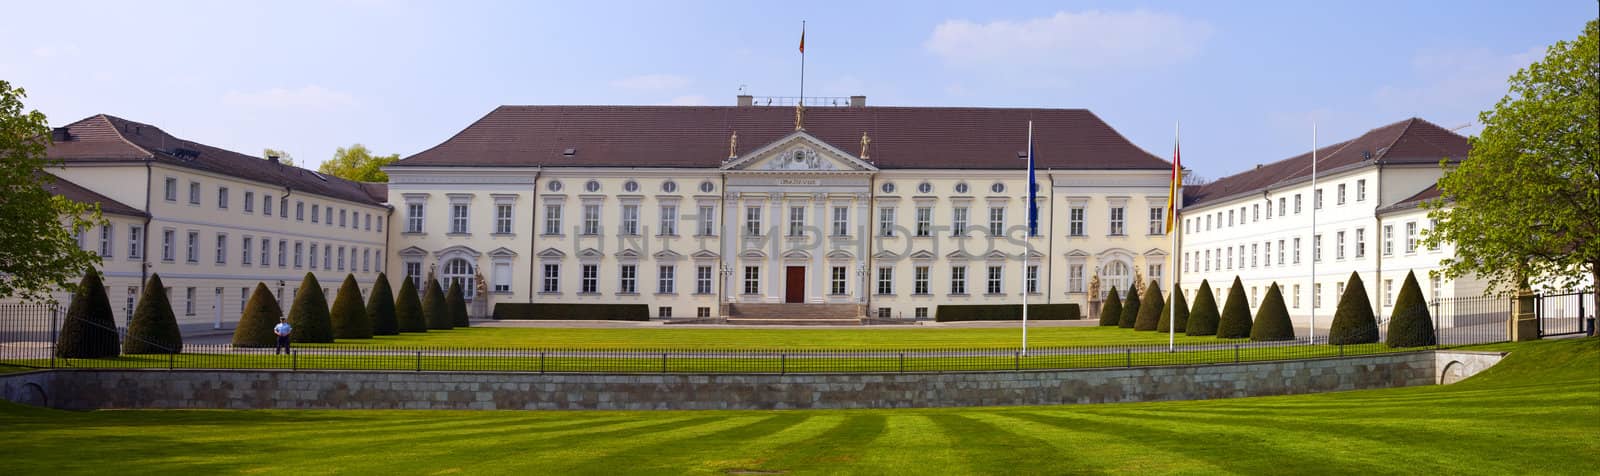 Schloss Bellevue (Bellevue Palace) in Berlin by chrisdorney